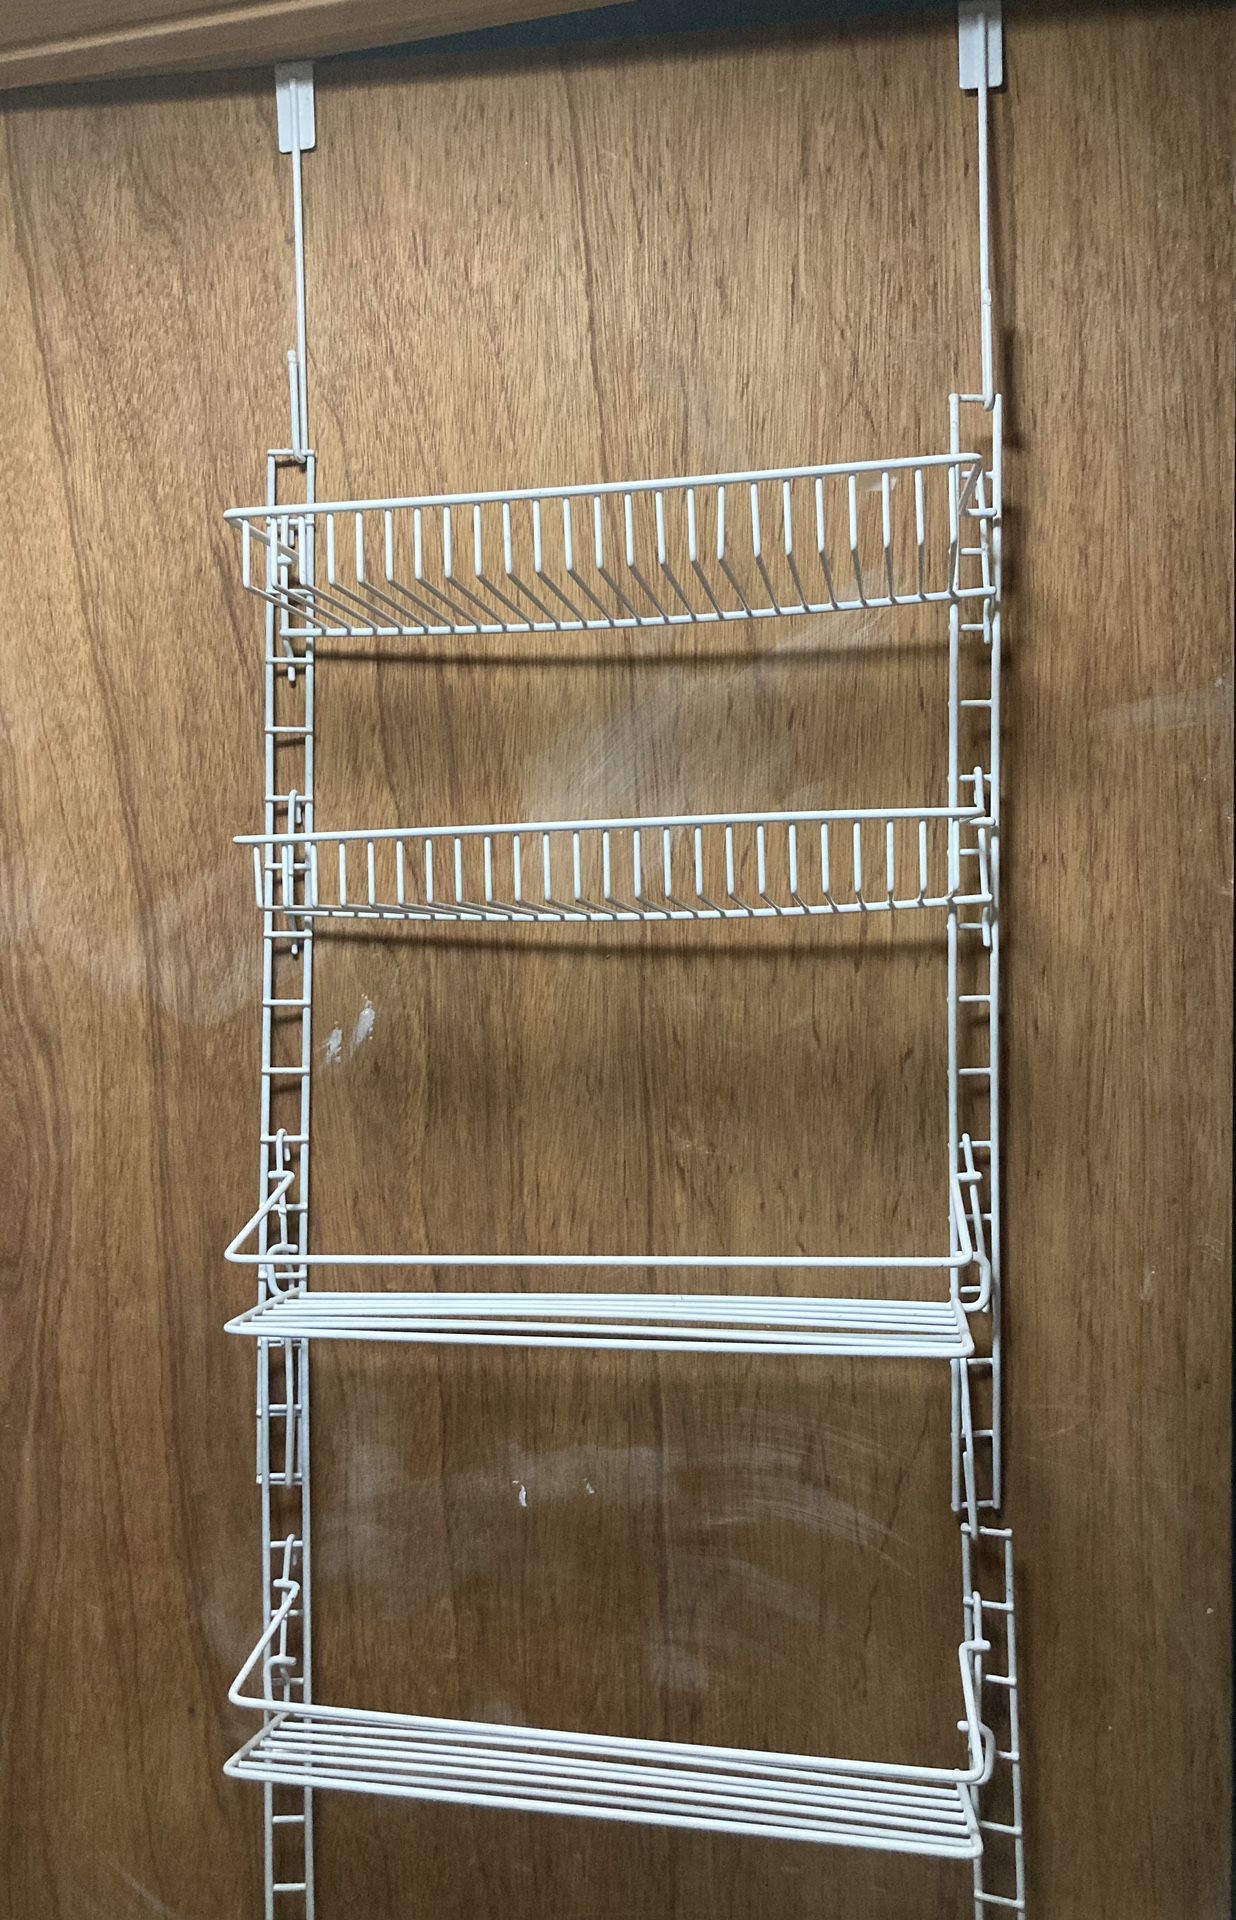 Smart Design Over The Door Pantry Organizer Rack with 6 Adjustable Shelves - 